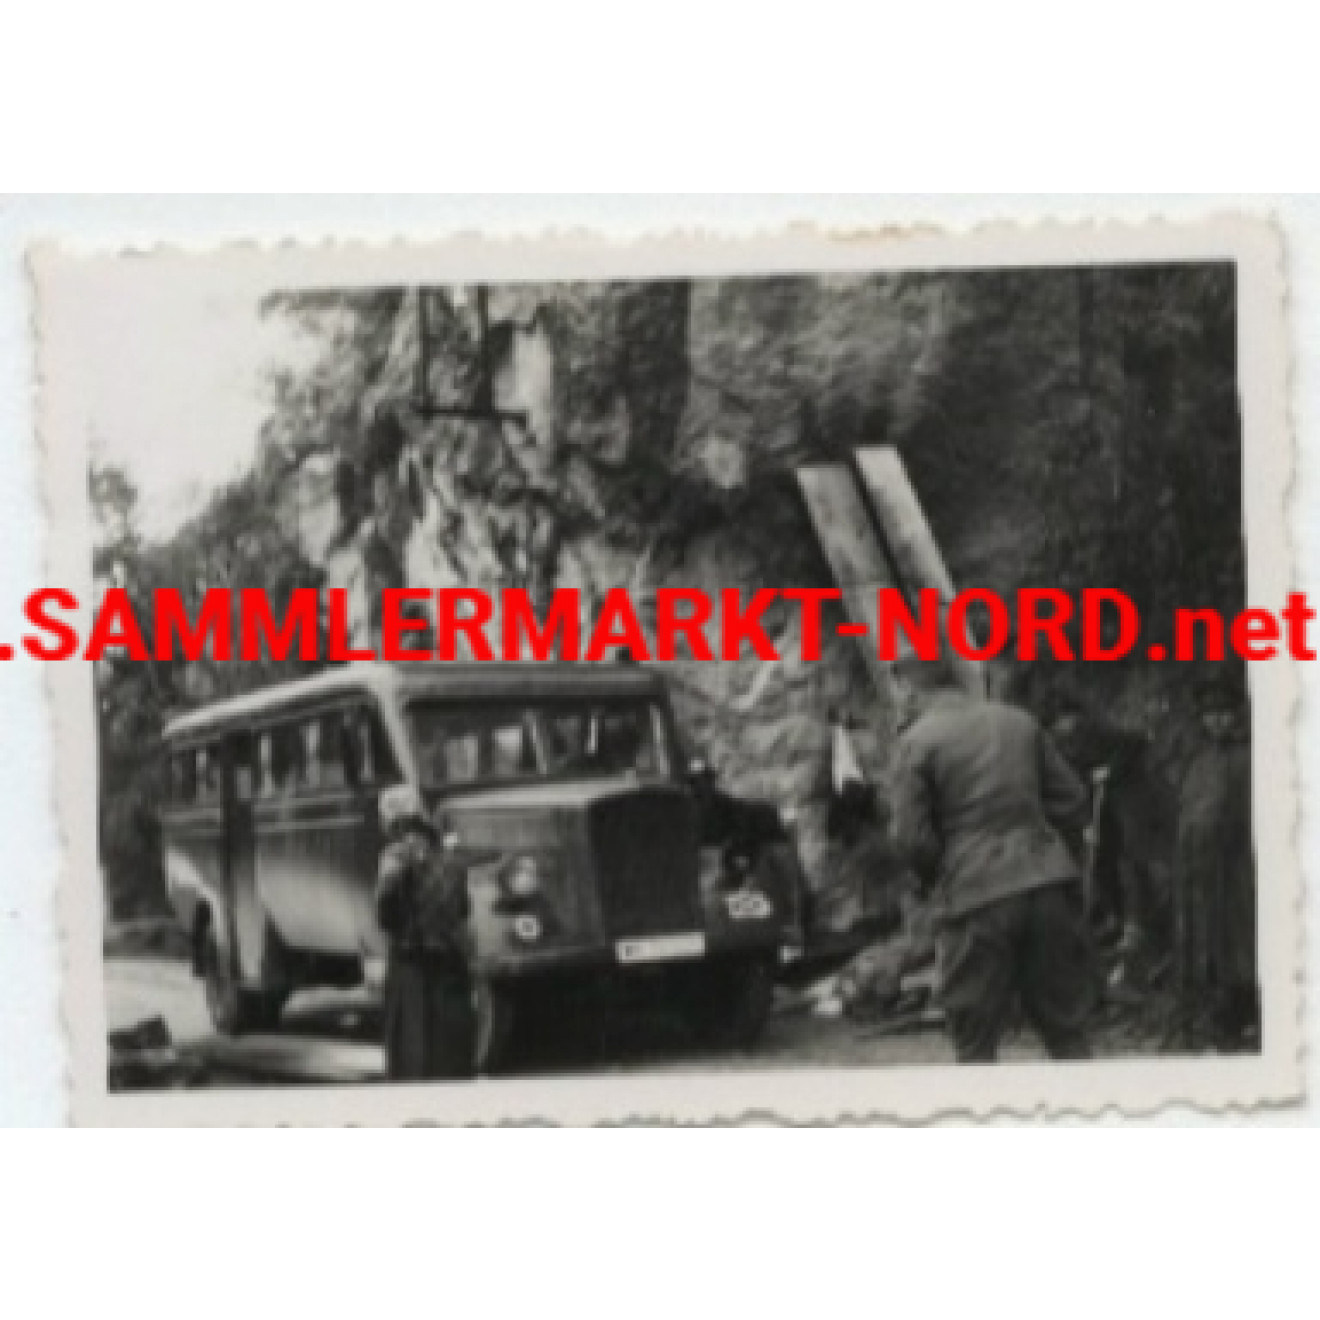 Wehrmacht bus in mountains